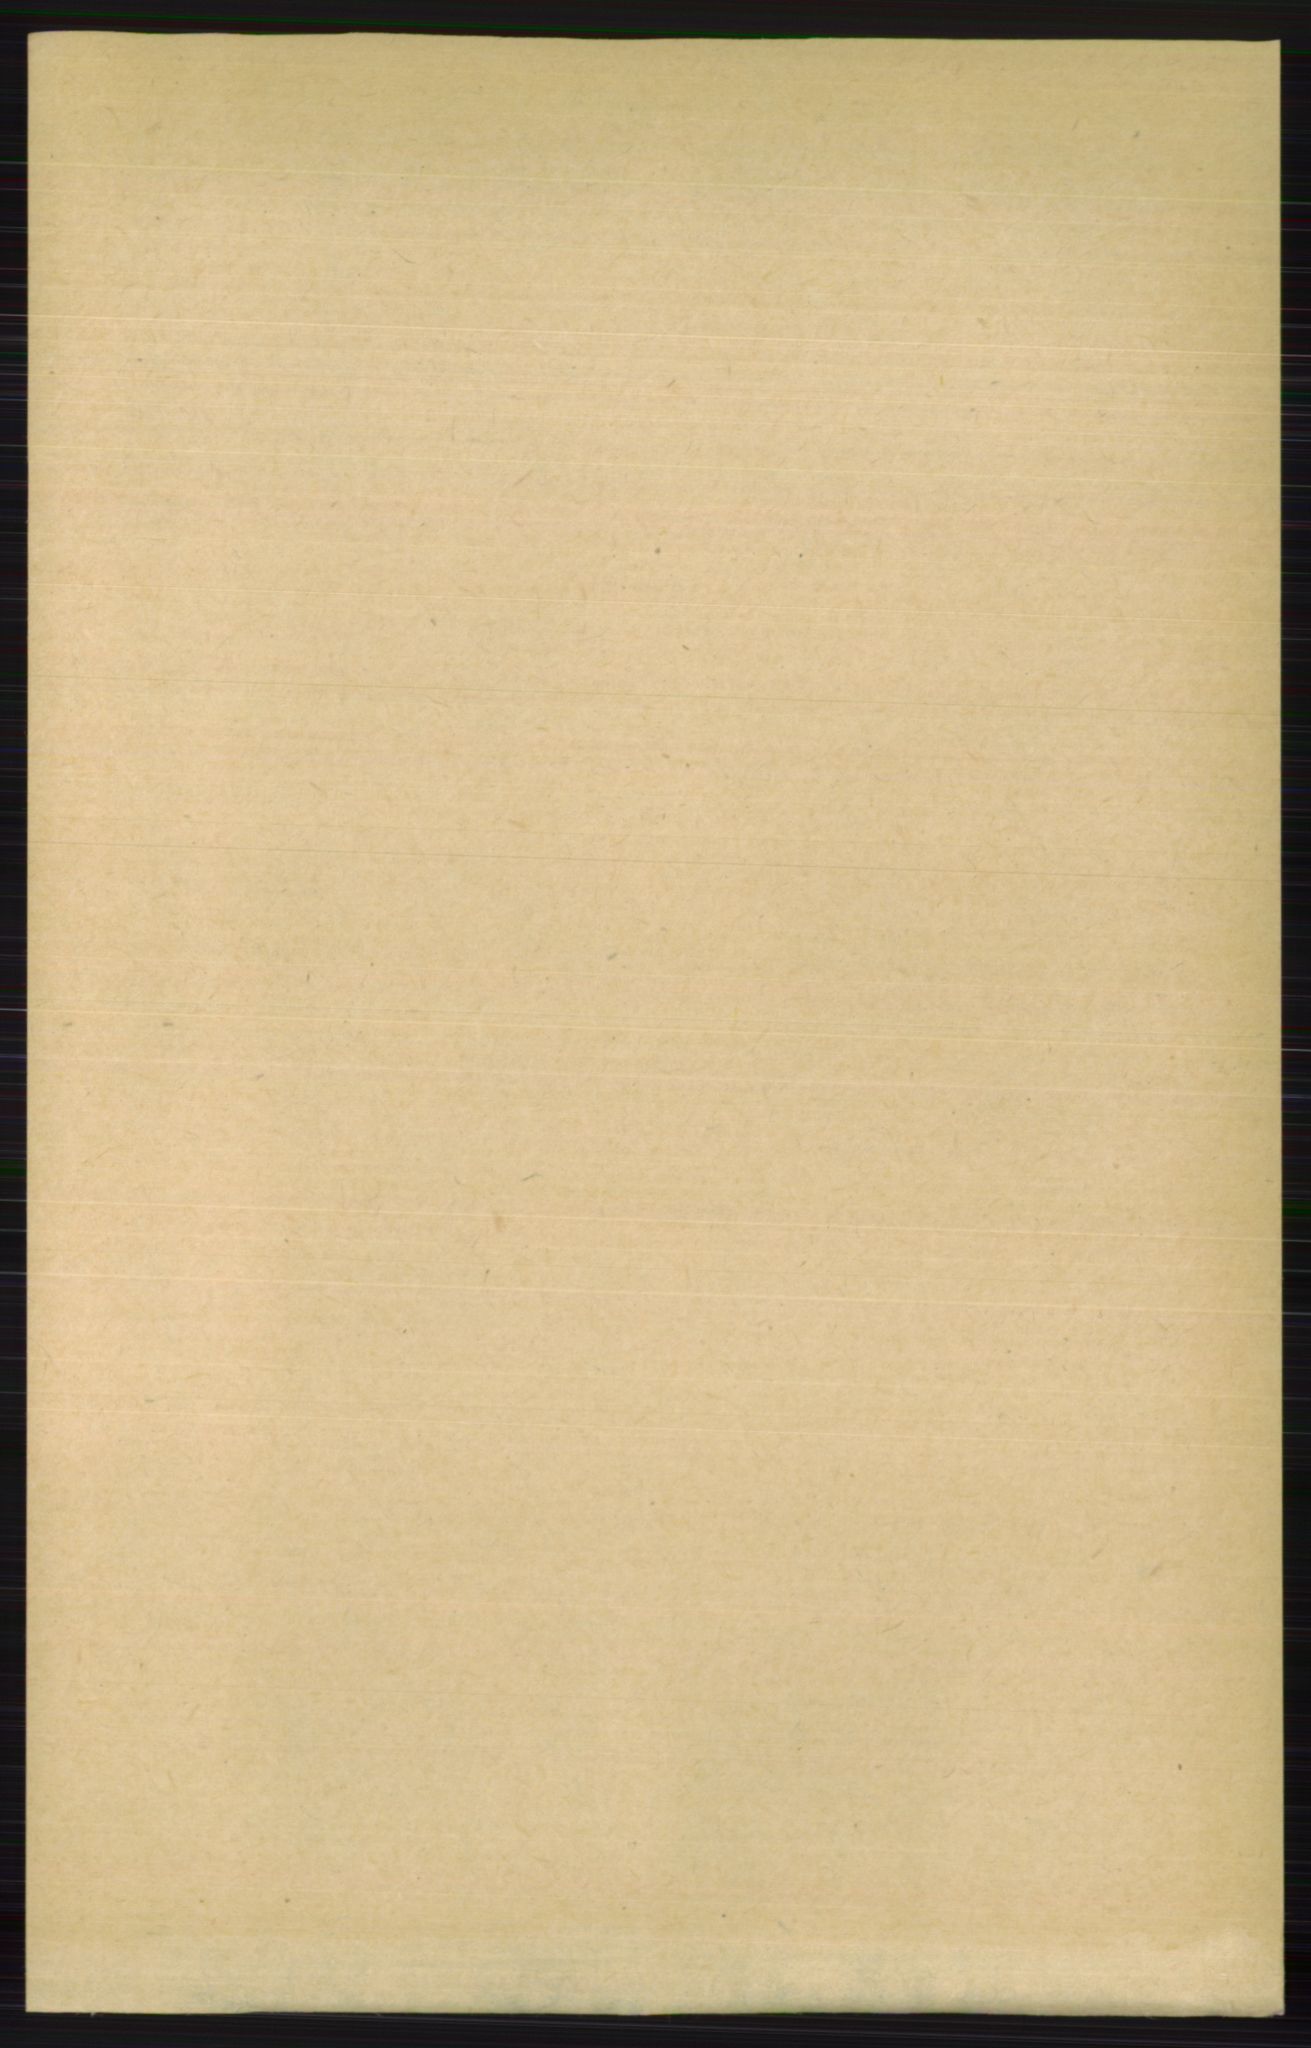 RA, Folketelling 1891 for 0621 Sigdal herred, 1891, s. 2421